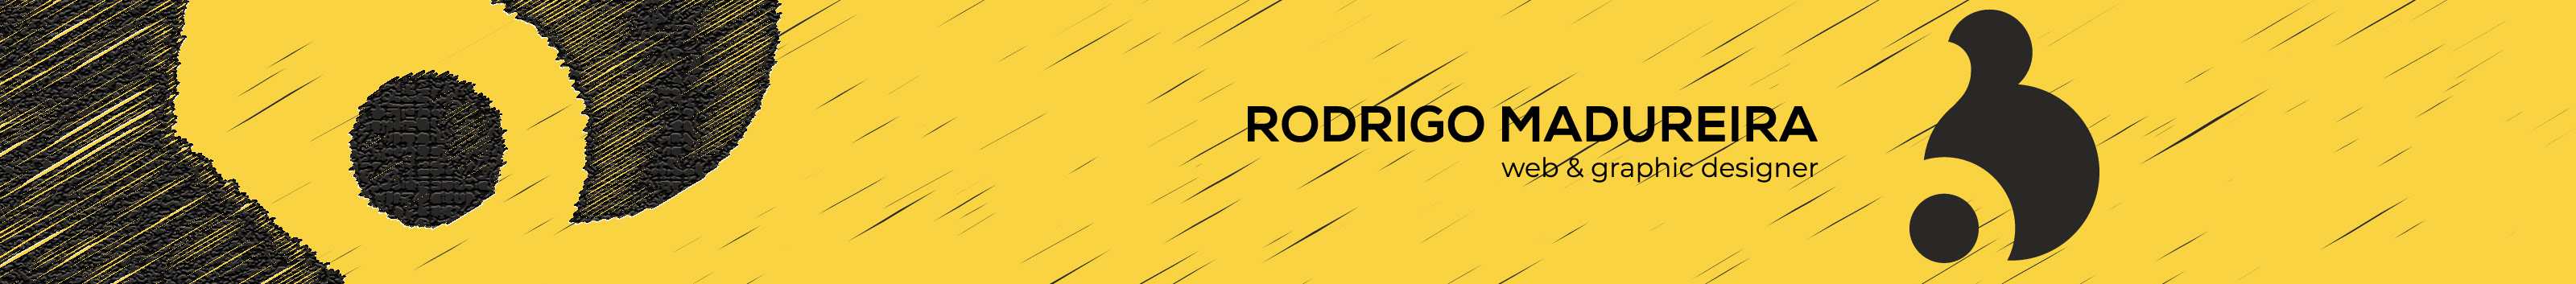 Rodrigo Madureira's profile banner